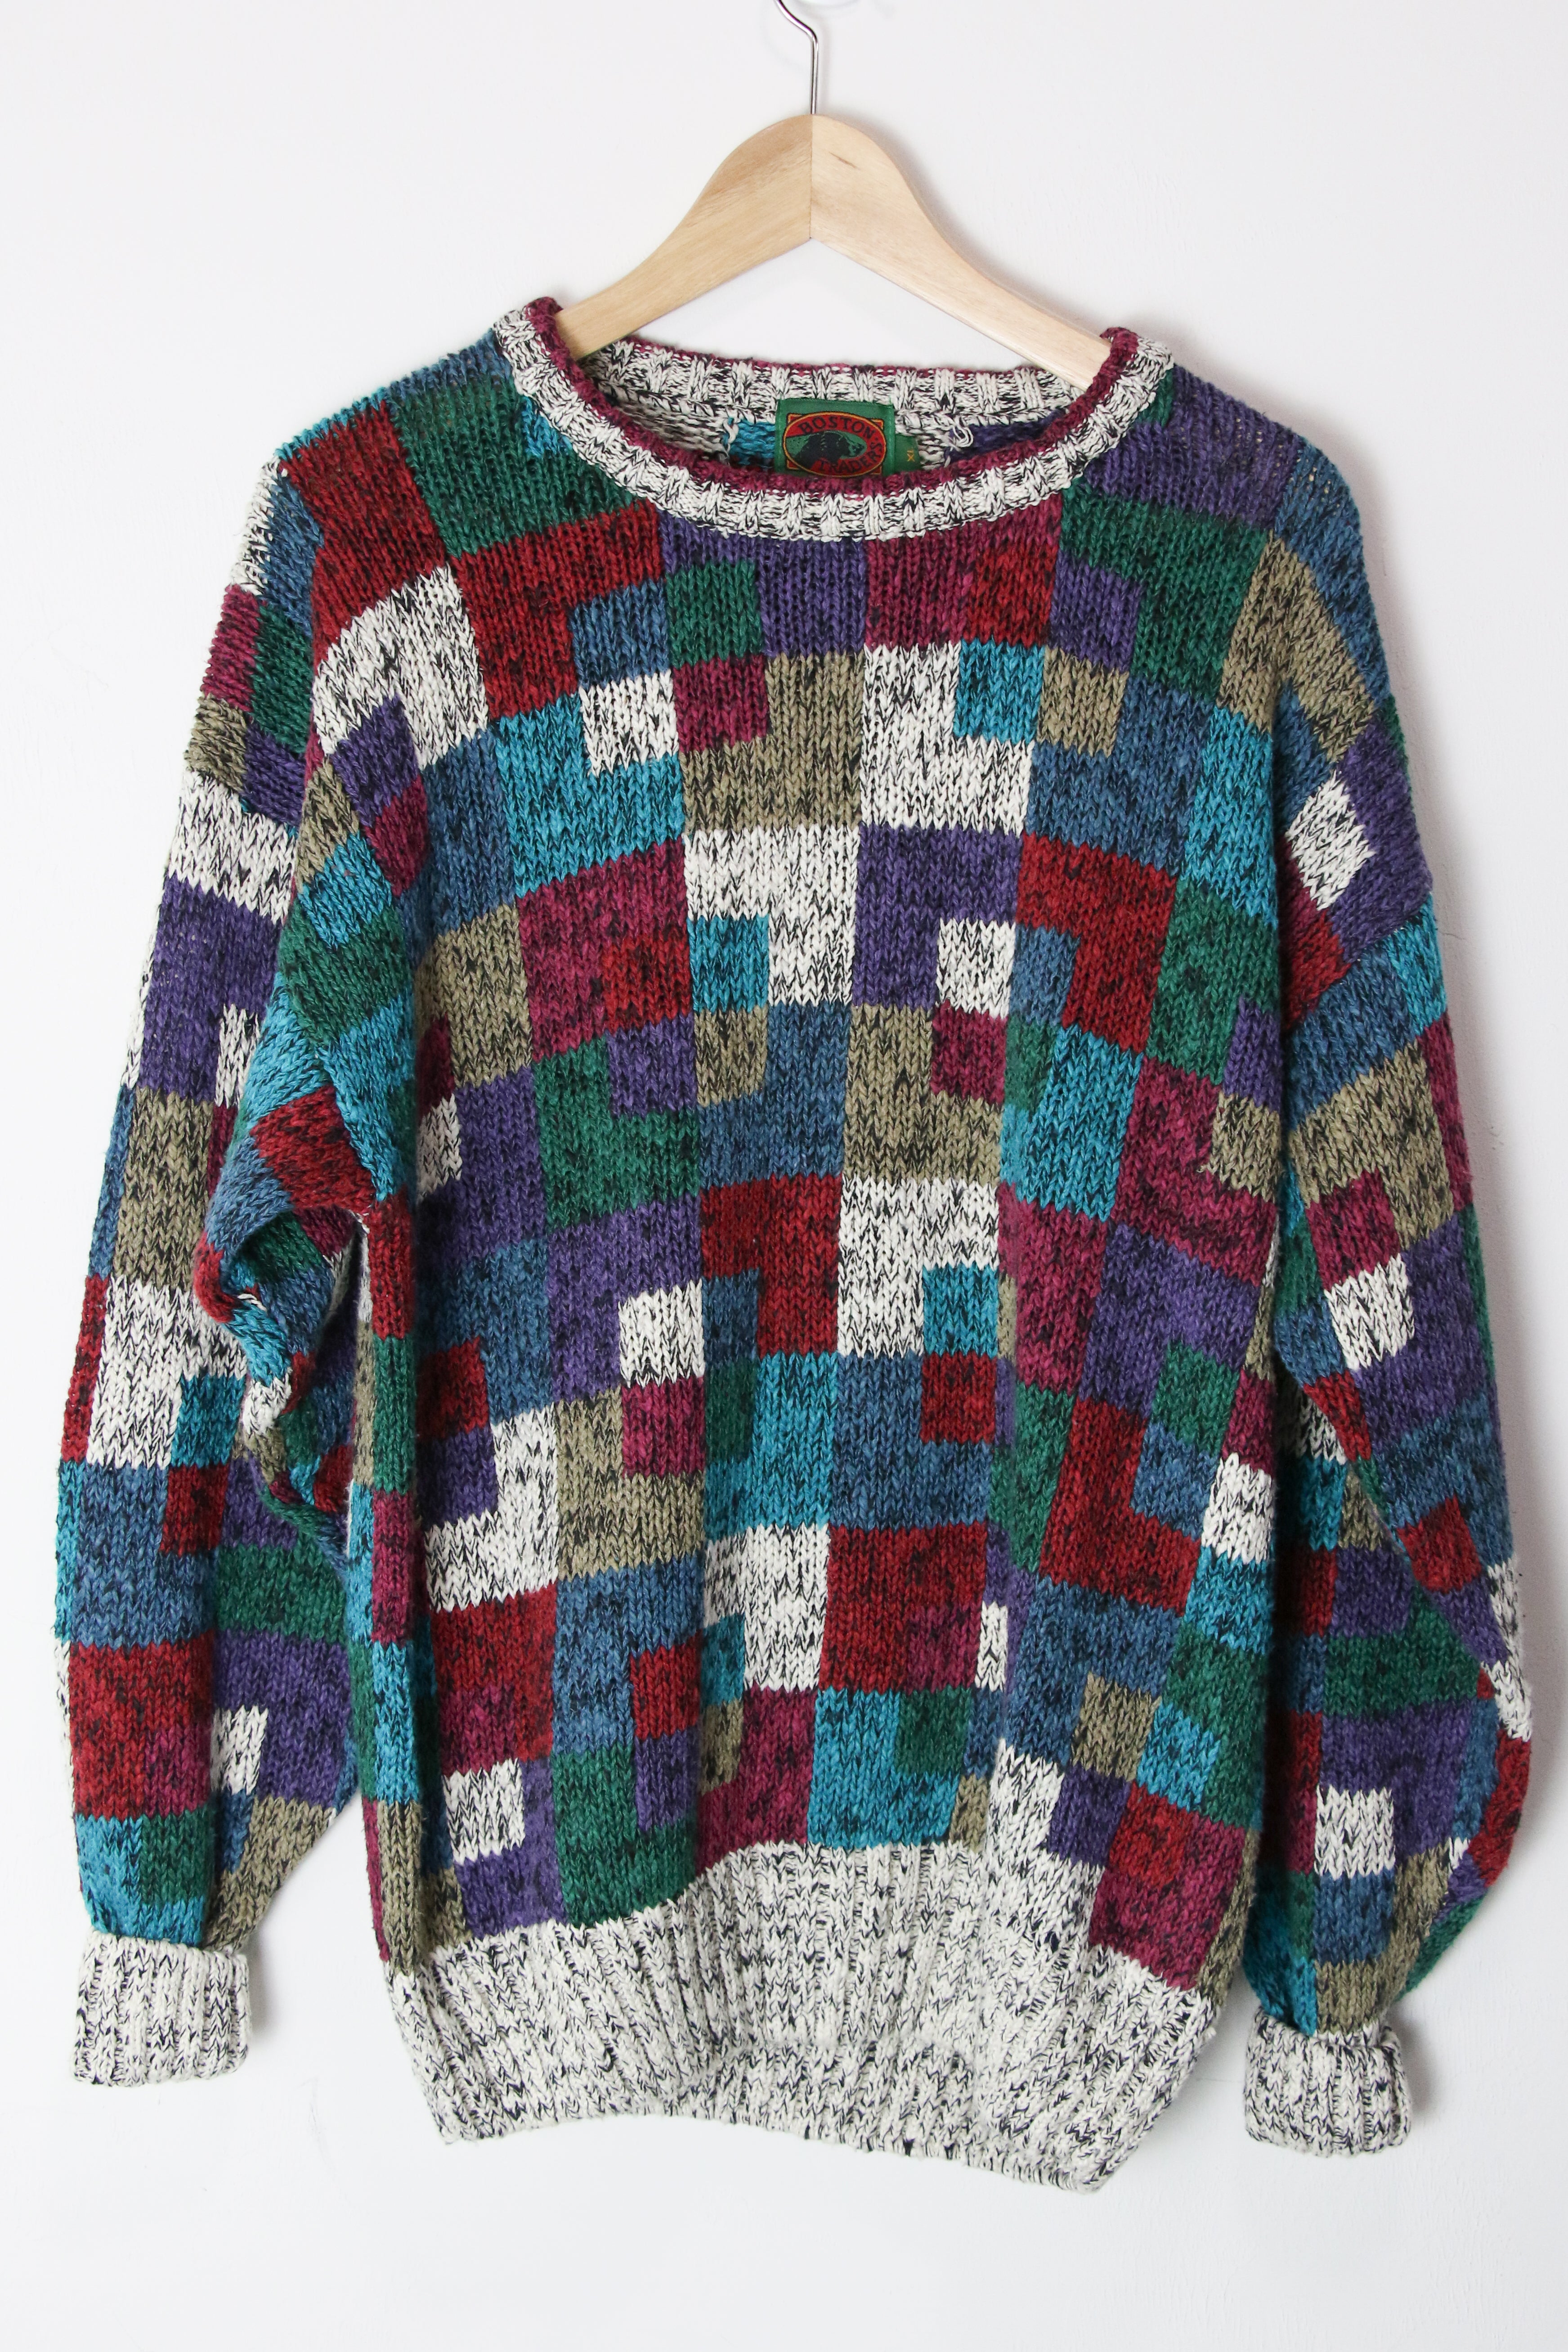 [XL] 1990s Colorblock Sweater